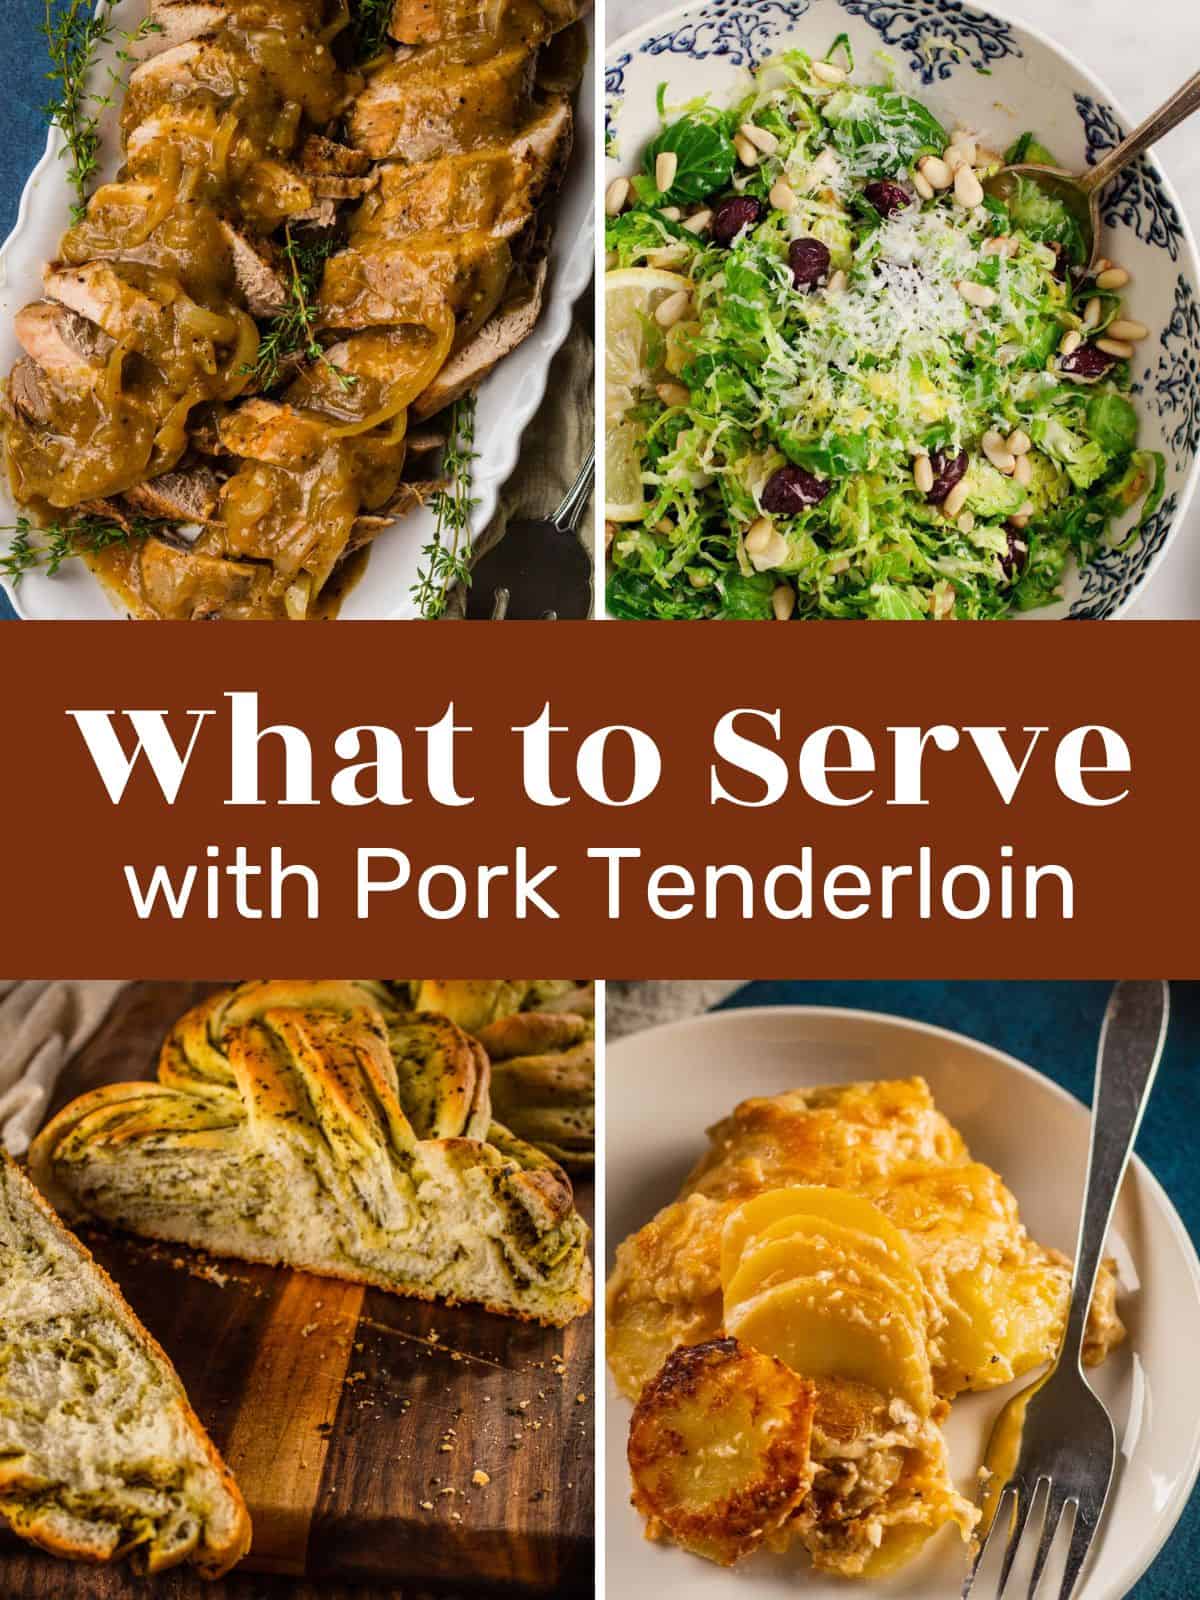 sliced pork tenderloin, salad, bread and cheesy potatoes.